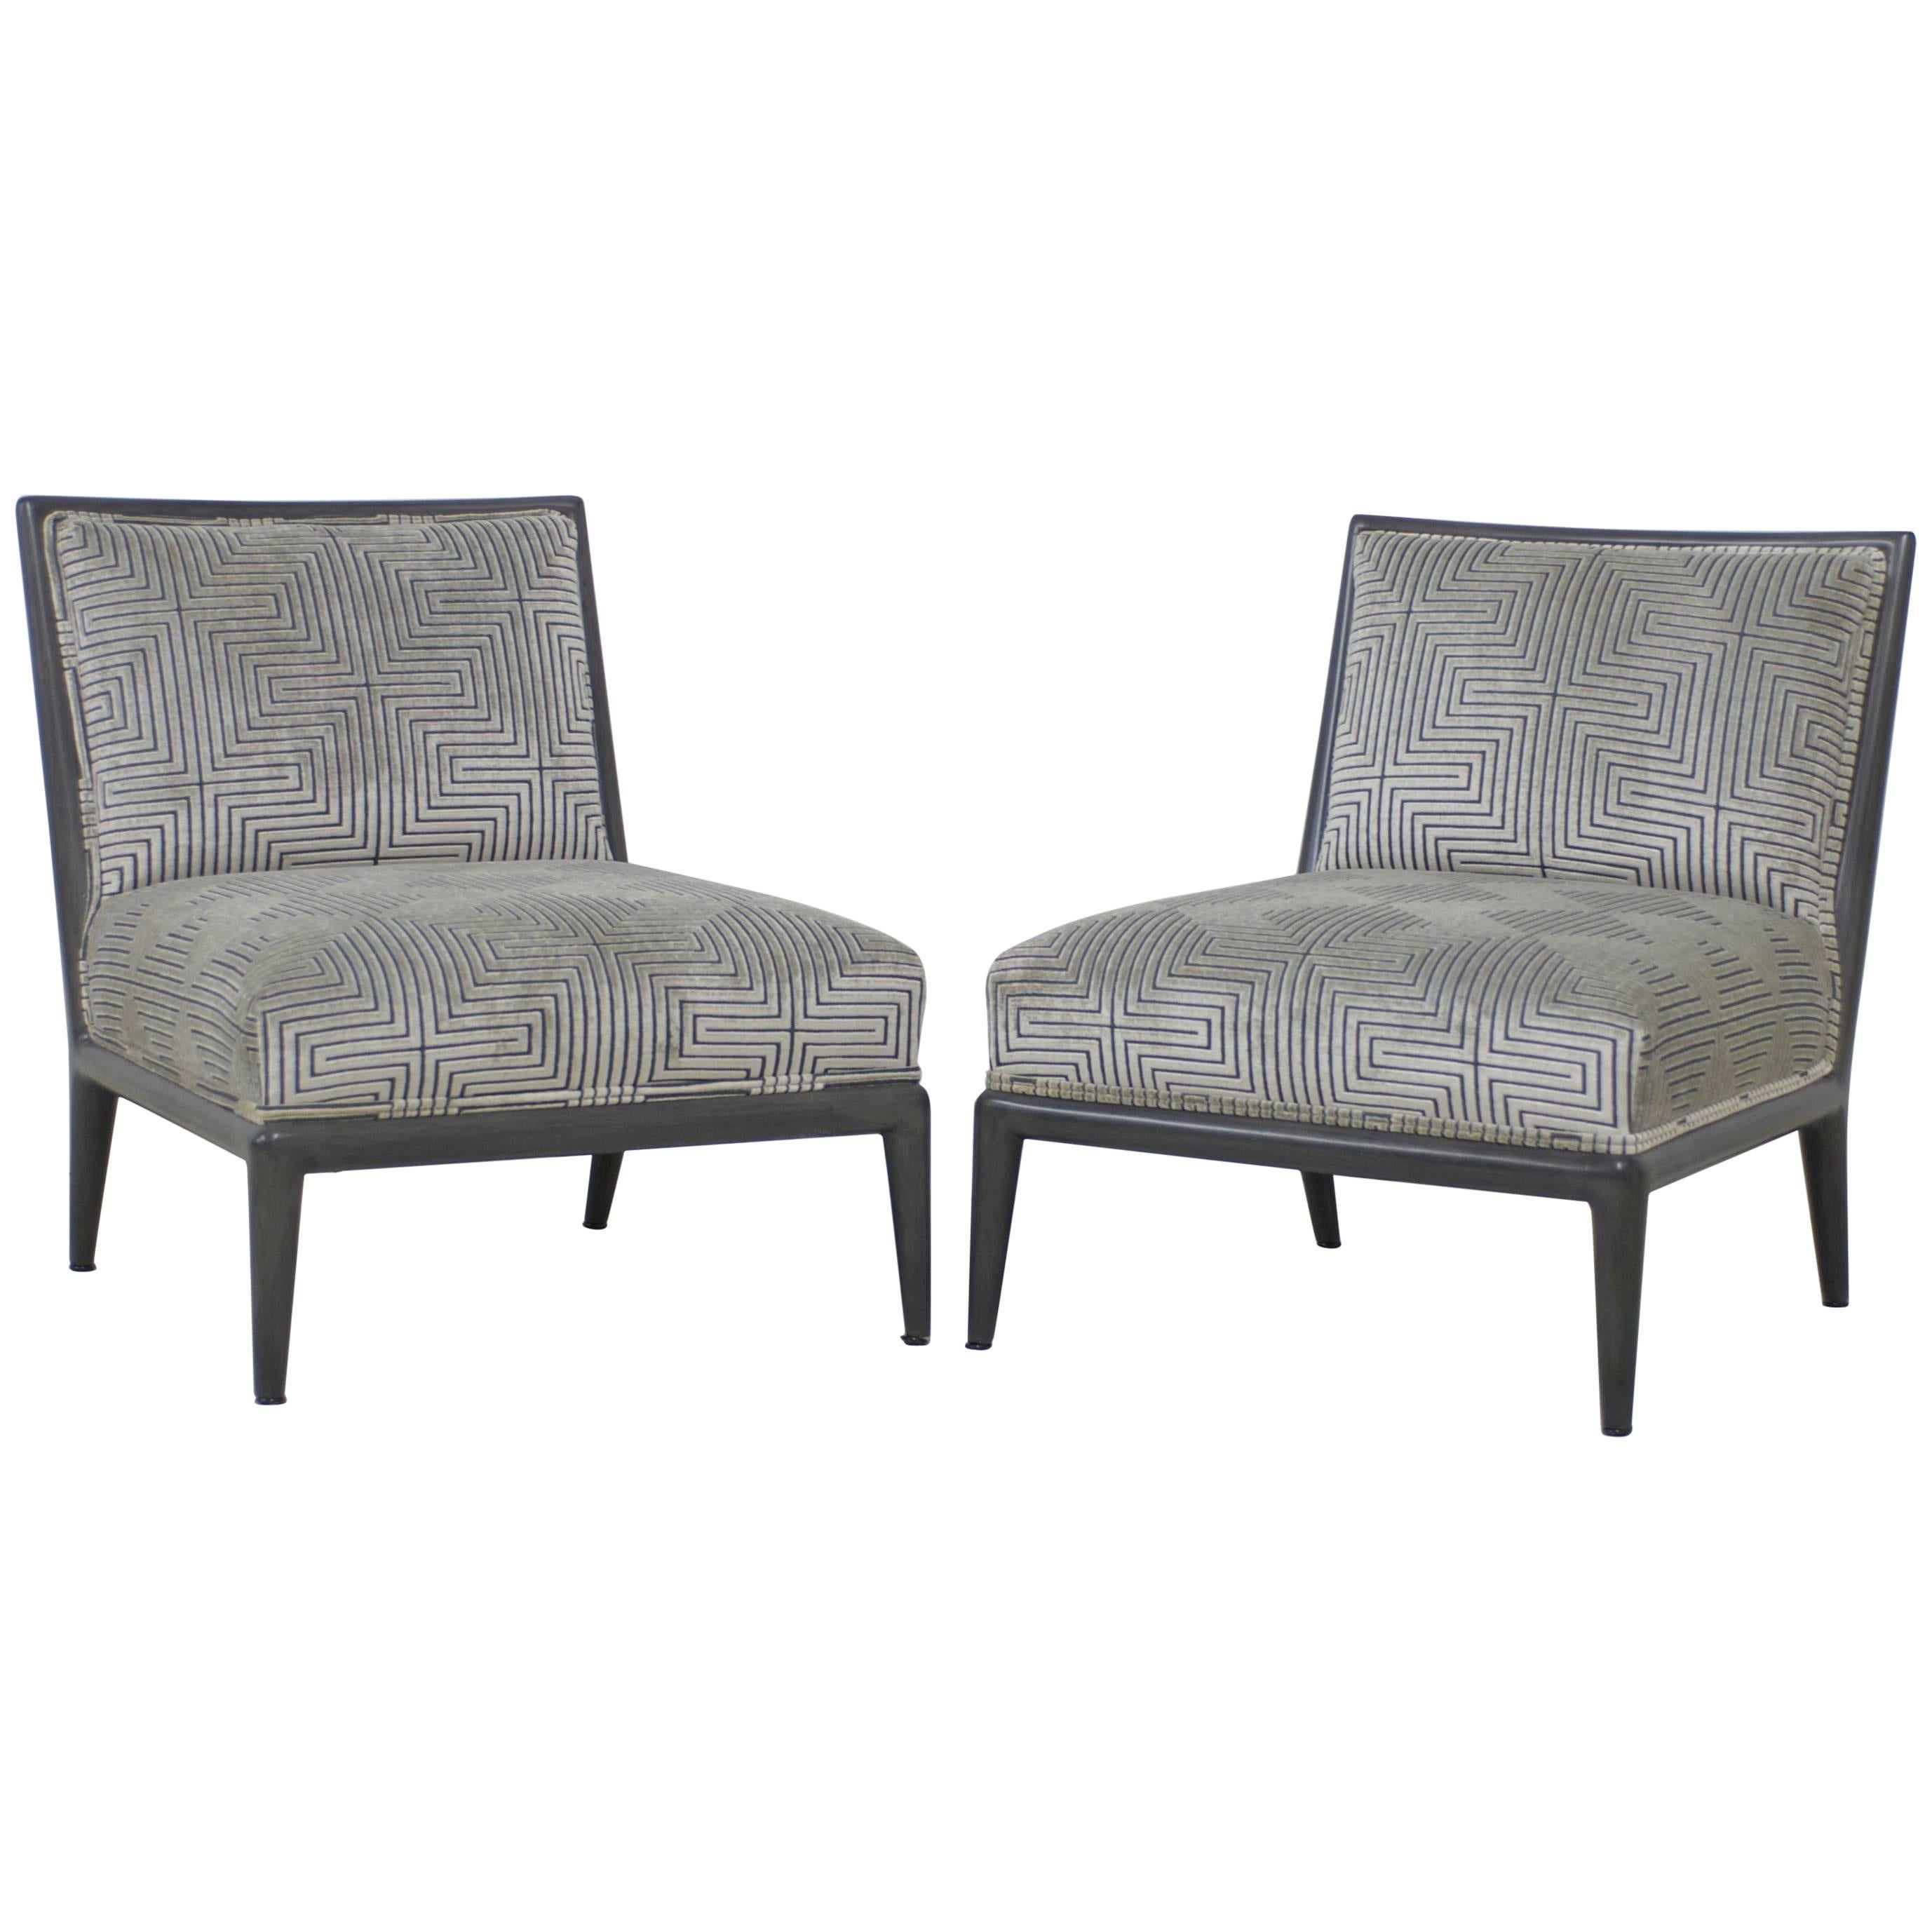 Pair of Charcoal Grey Finish Geometric Cut Velvet Mid-Century Slipper Chairs